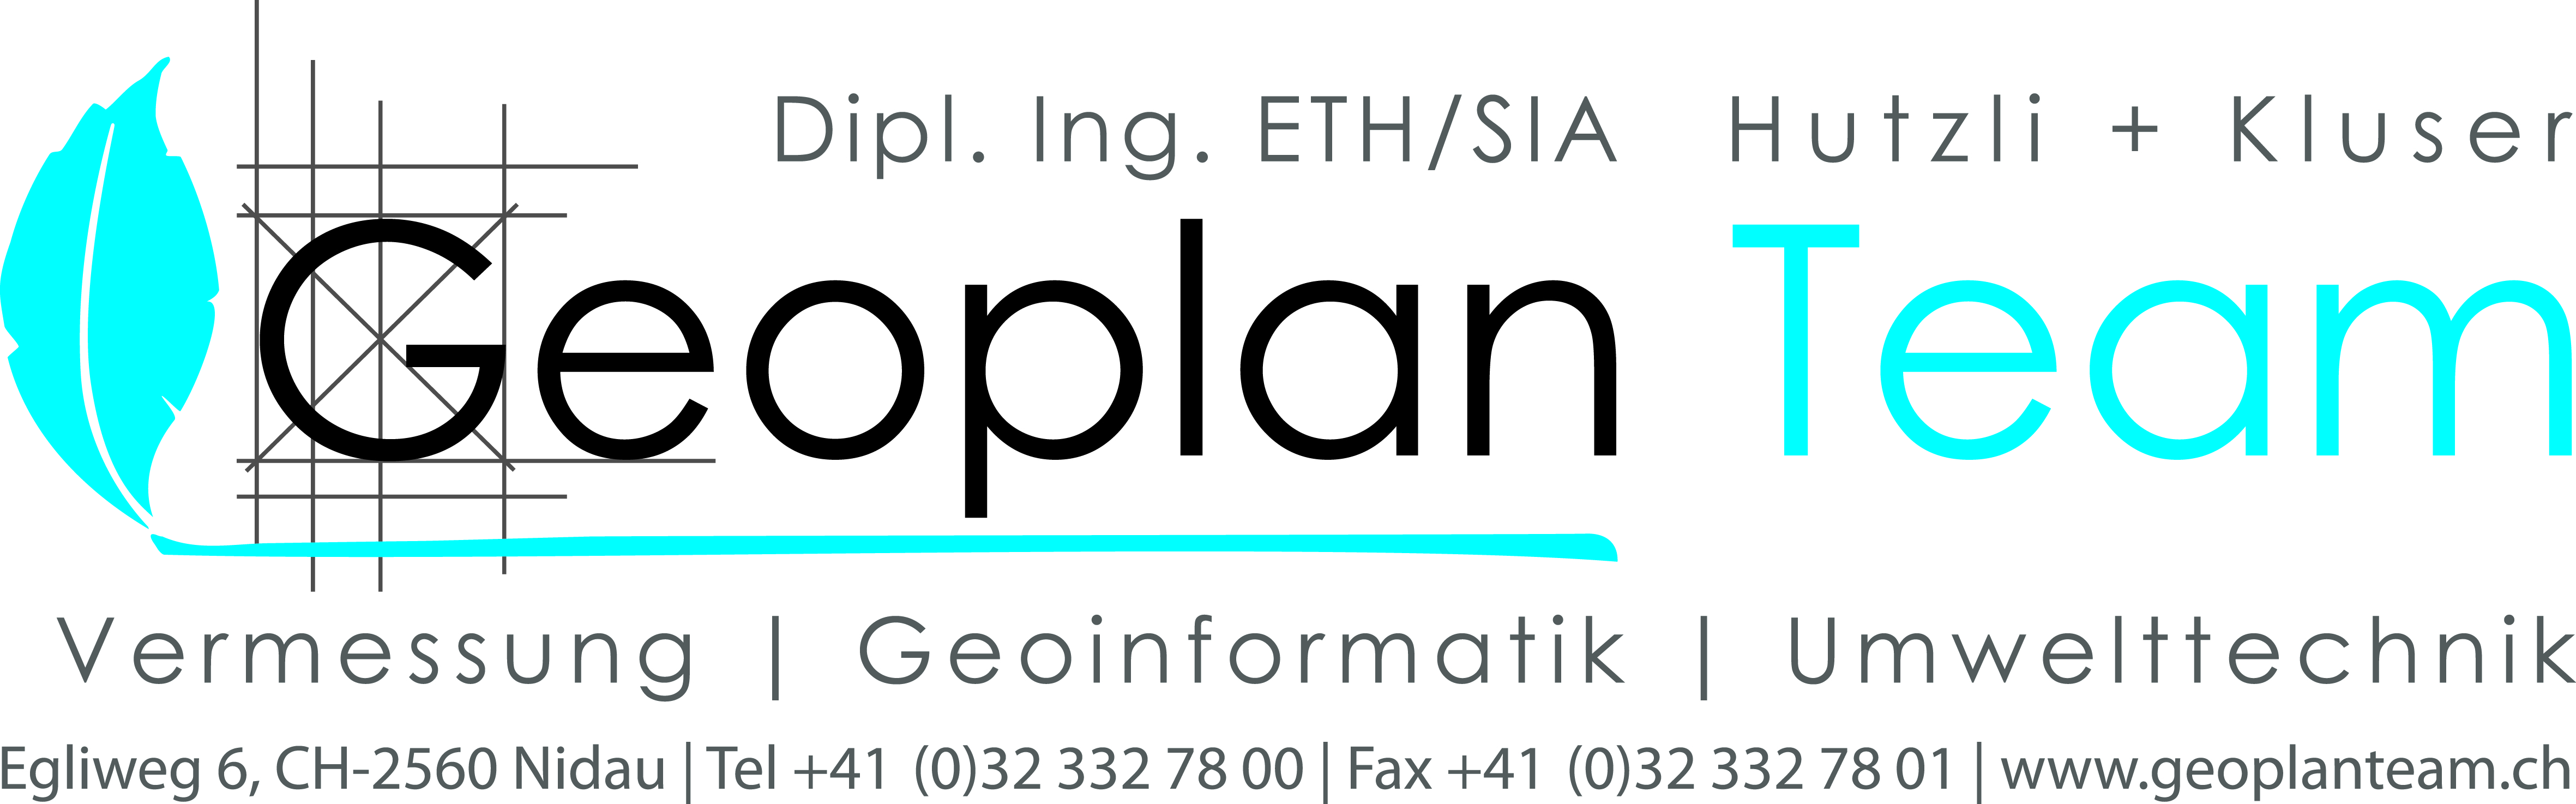 Geoplan Team